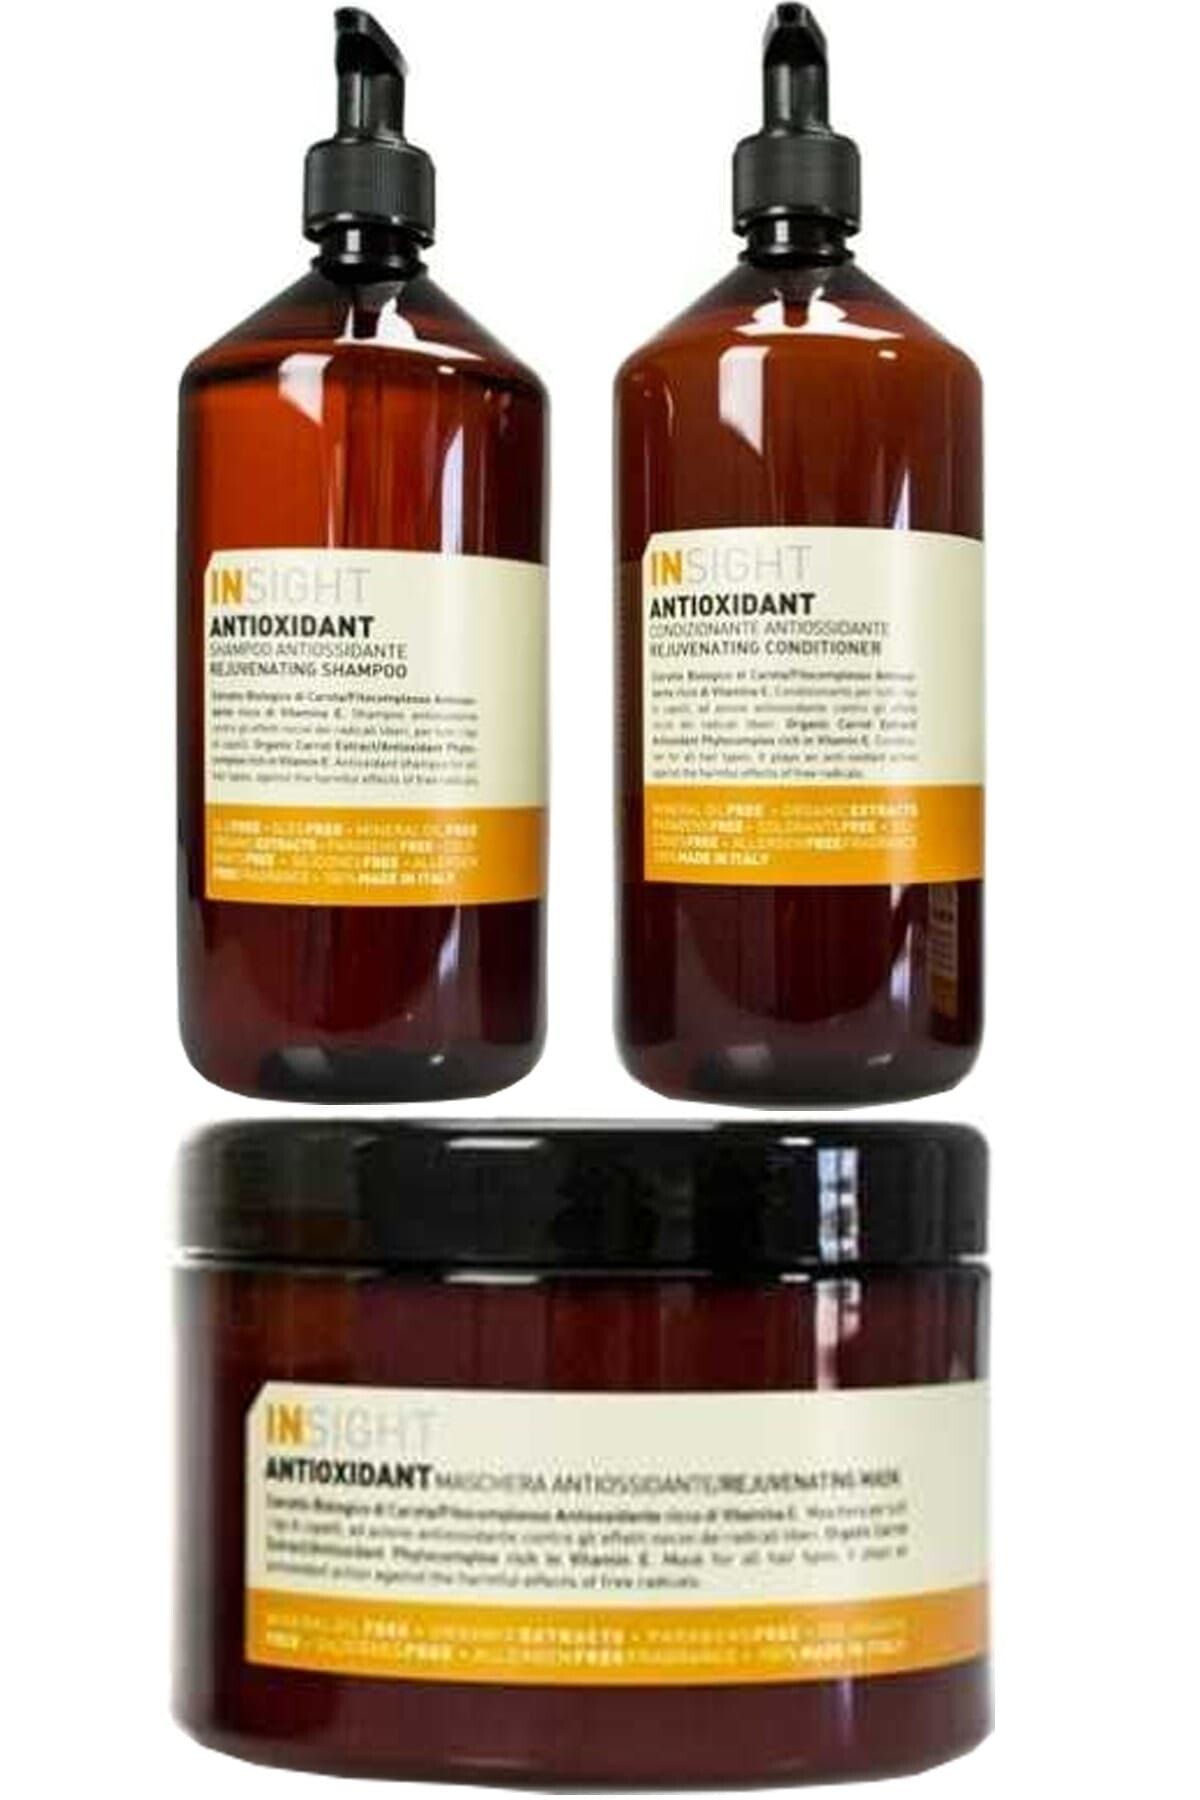 Insight Antioxidant Rejuvenating Antioksidan Şampuan 900 ml+ Krem 900 ml+ Maske 500 ml